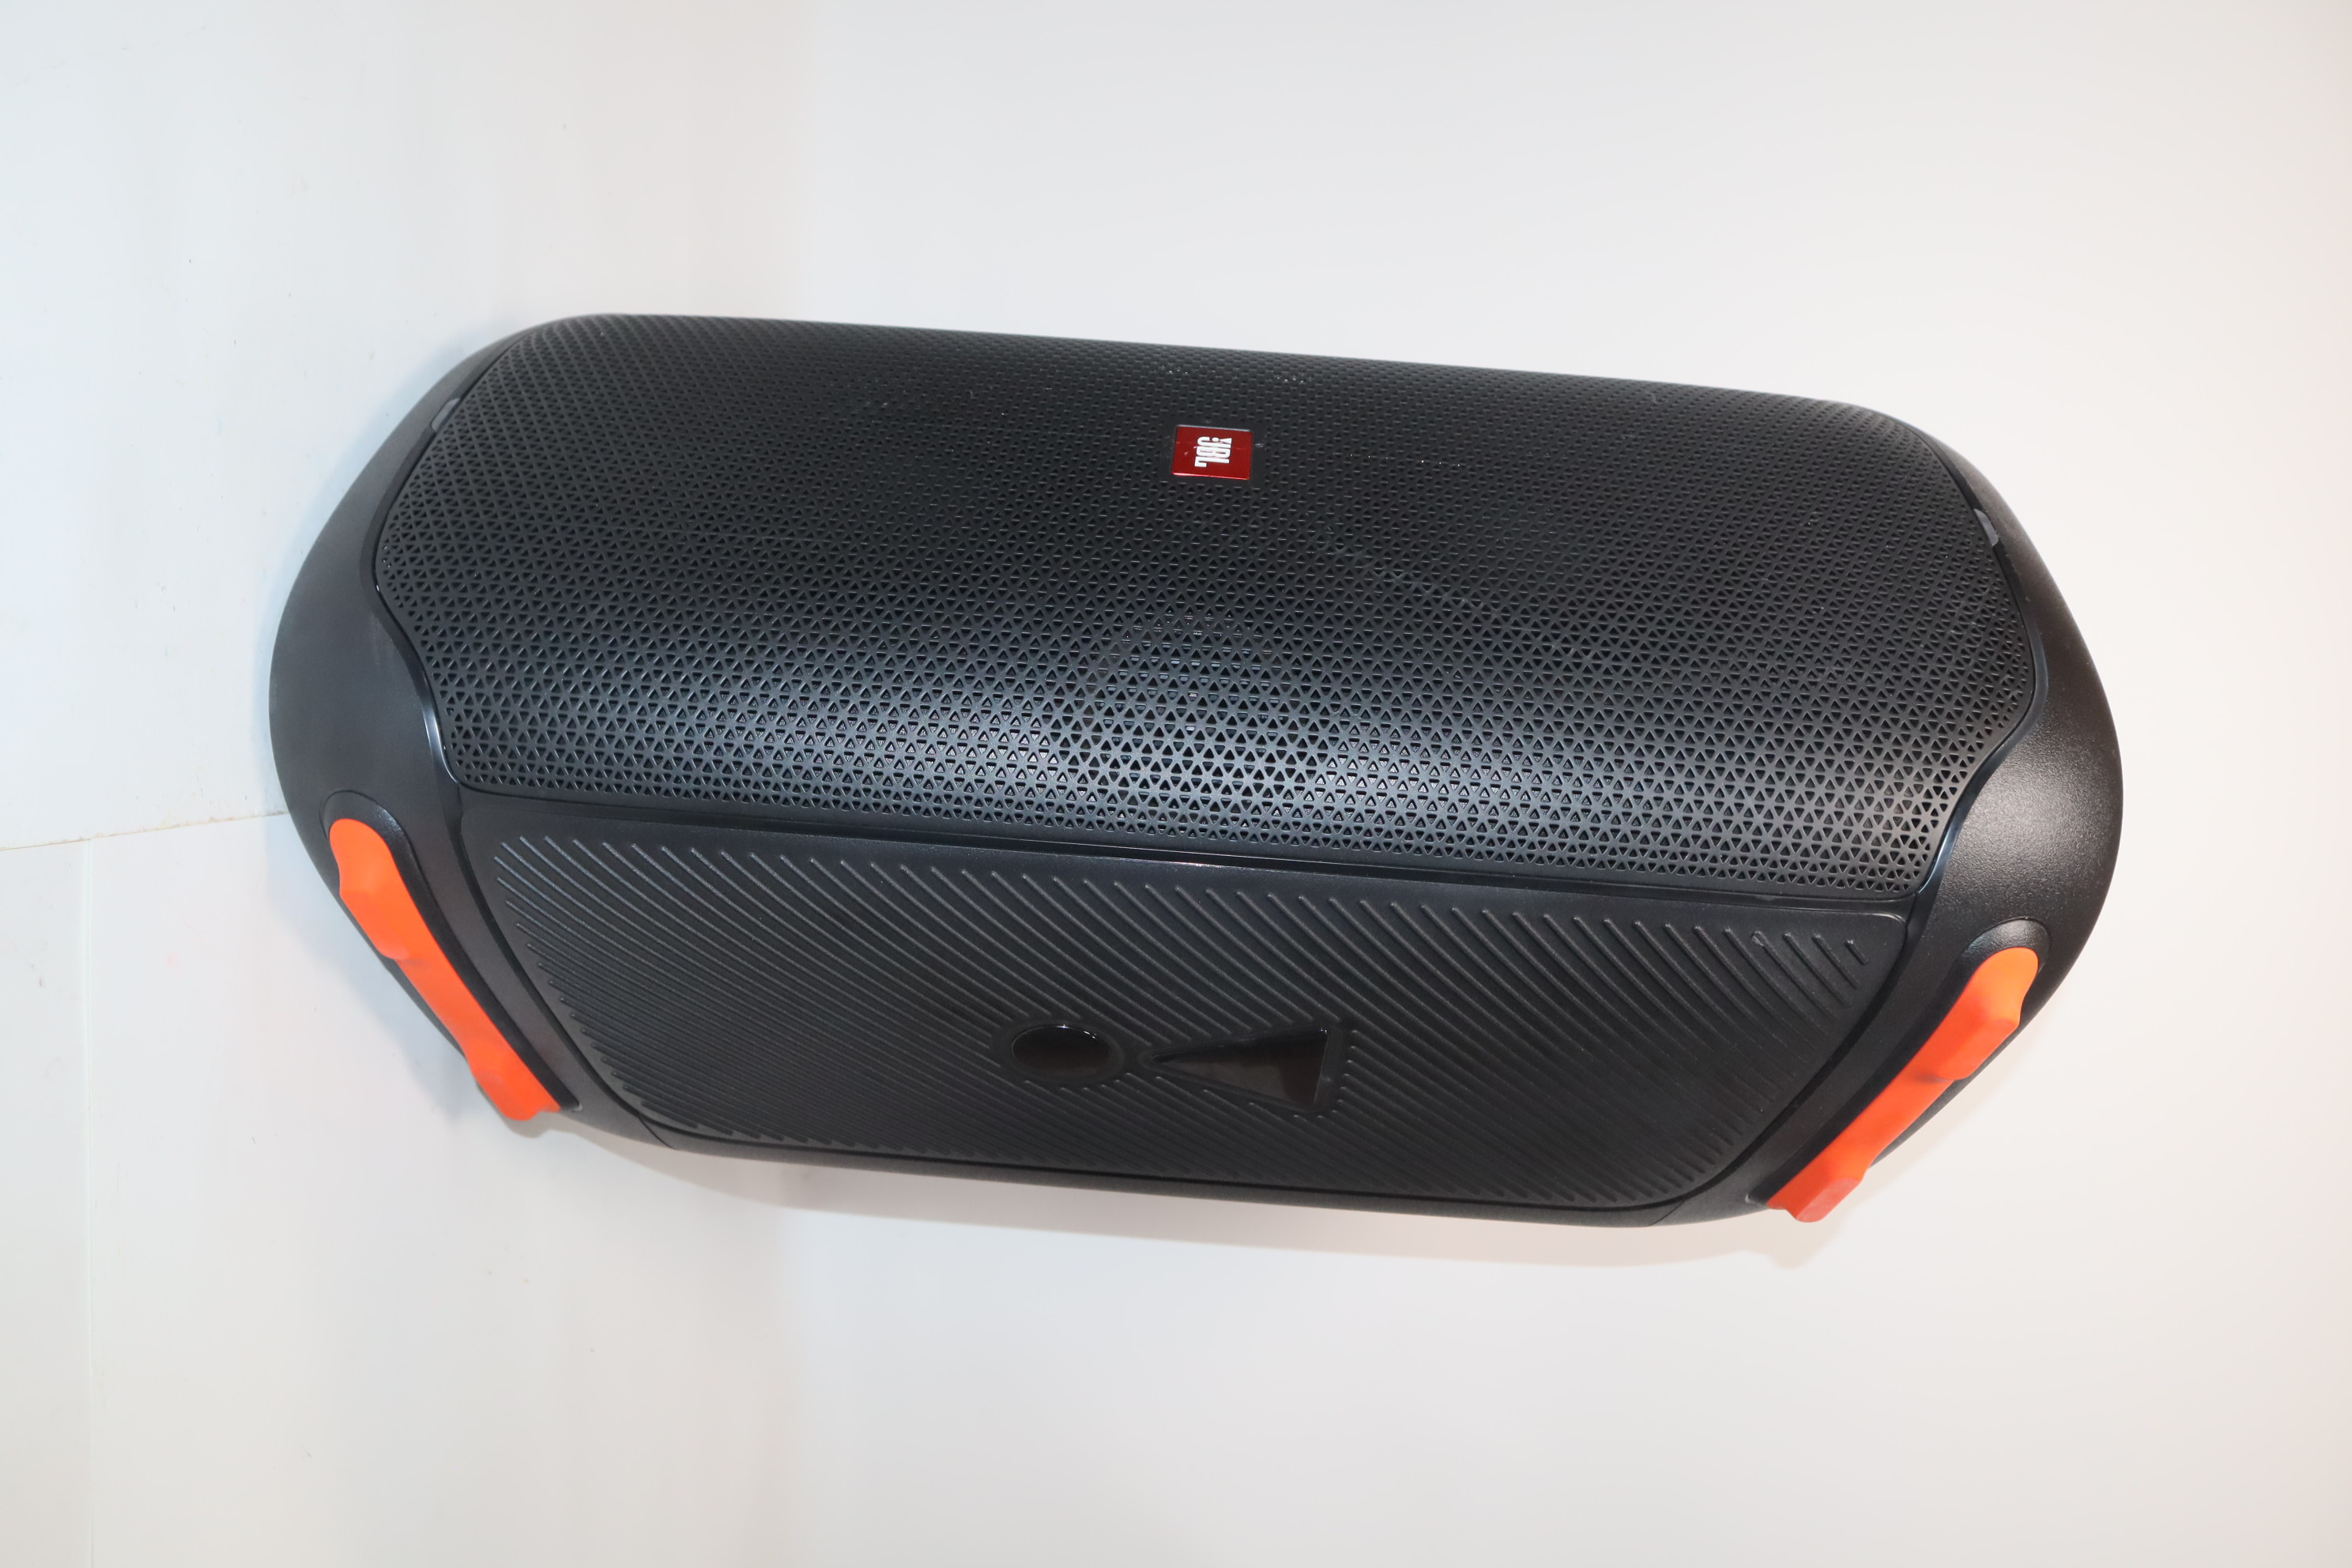 Jbl Party Box 110 Bluetooth Speaker - Black : Target